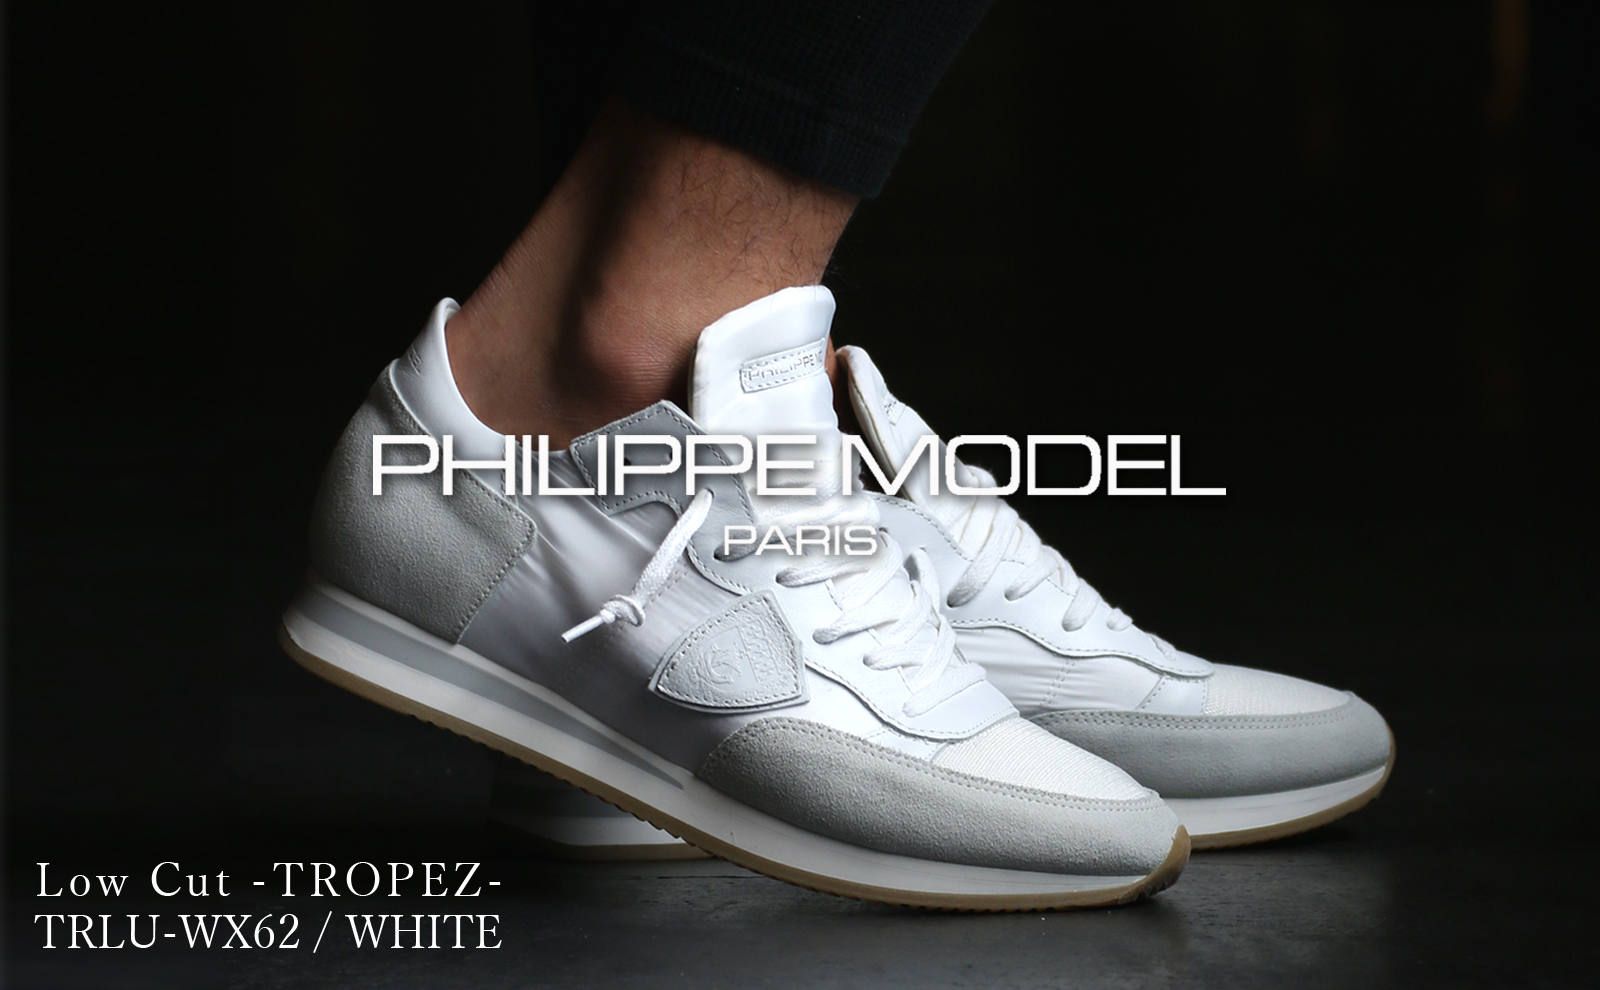 PHILIPPE MODEL】 TRLU-WX62 / 完売前に入手しておきたい”白トロペ